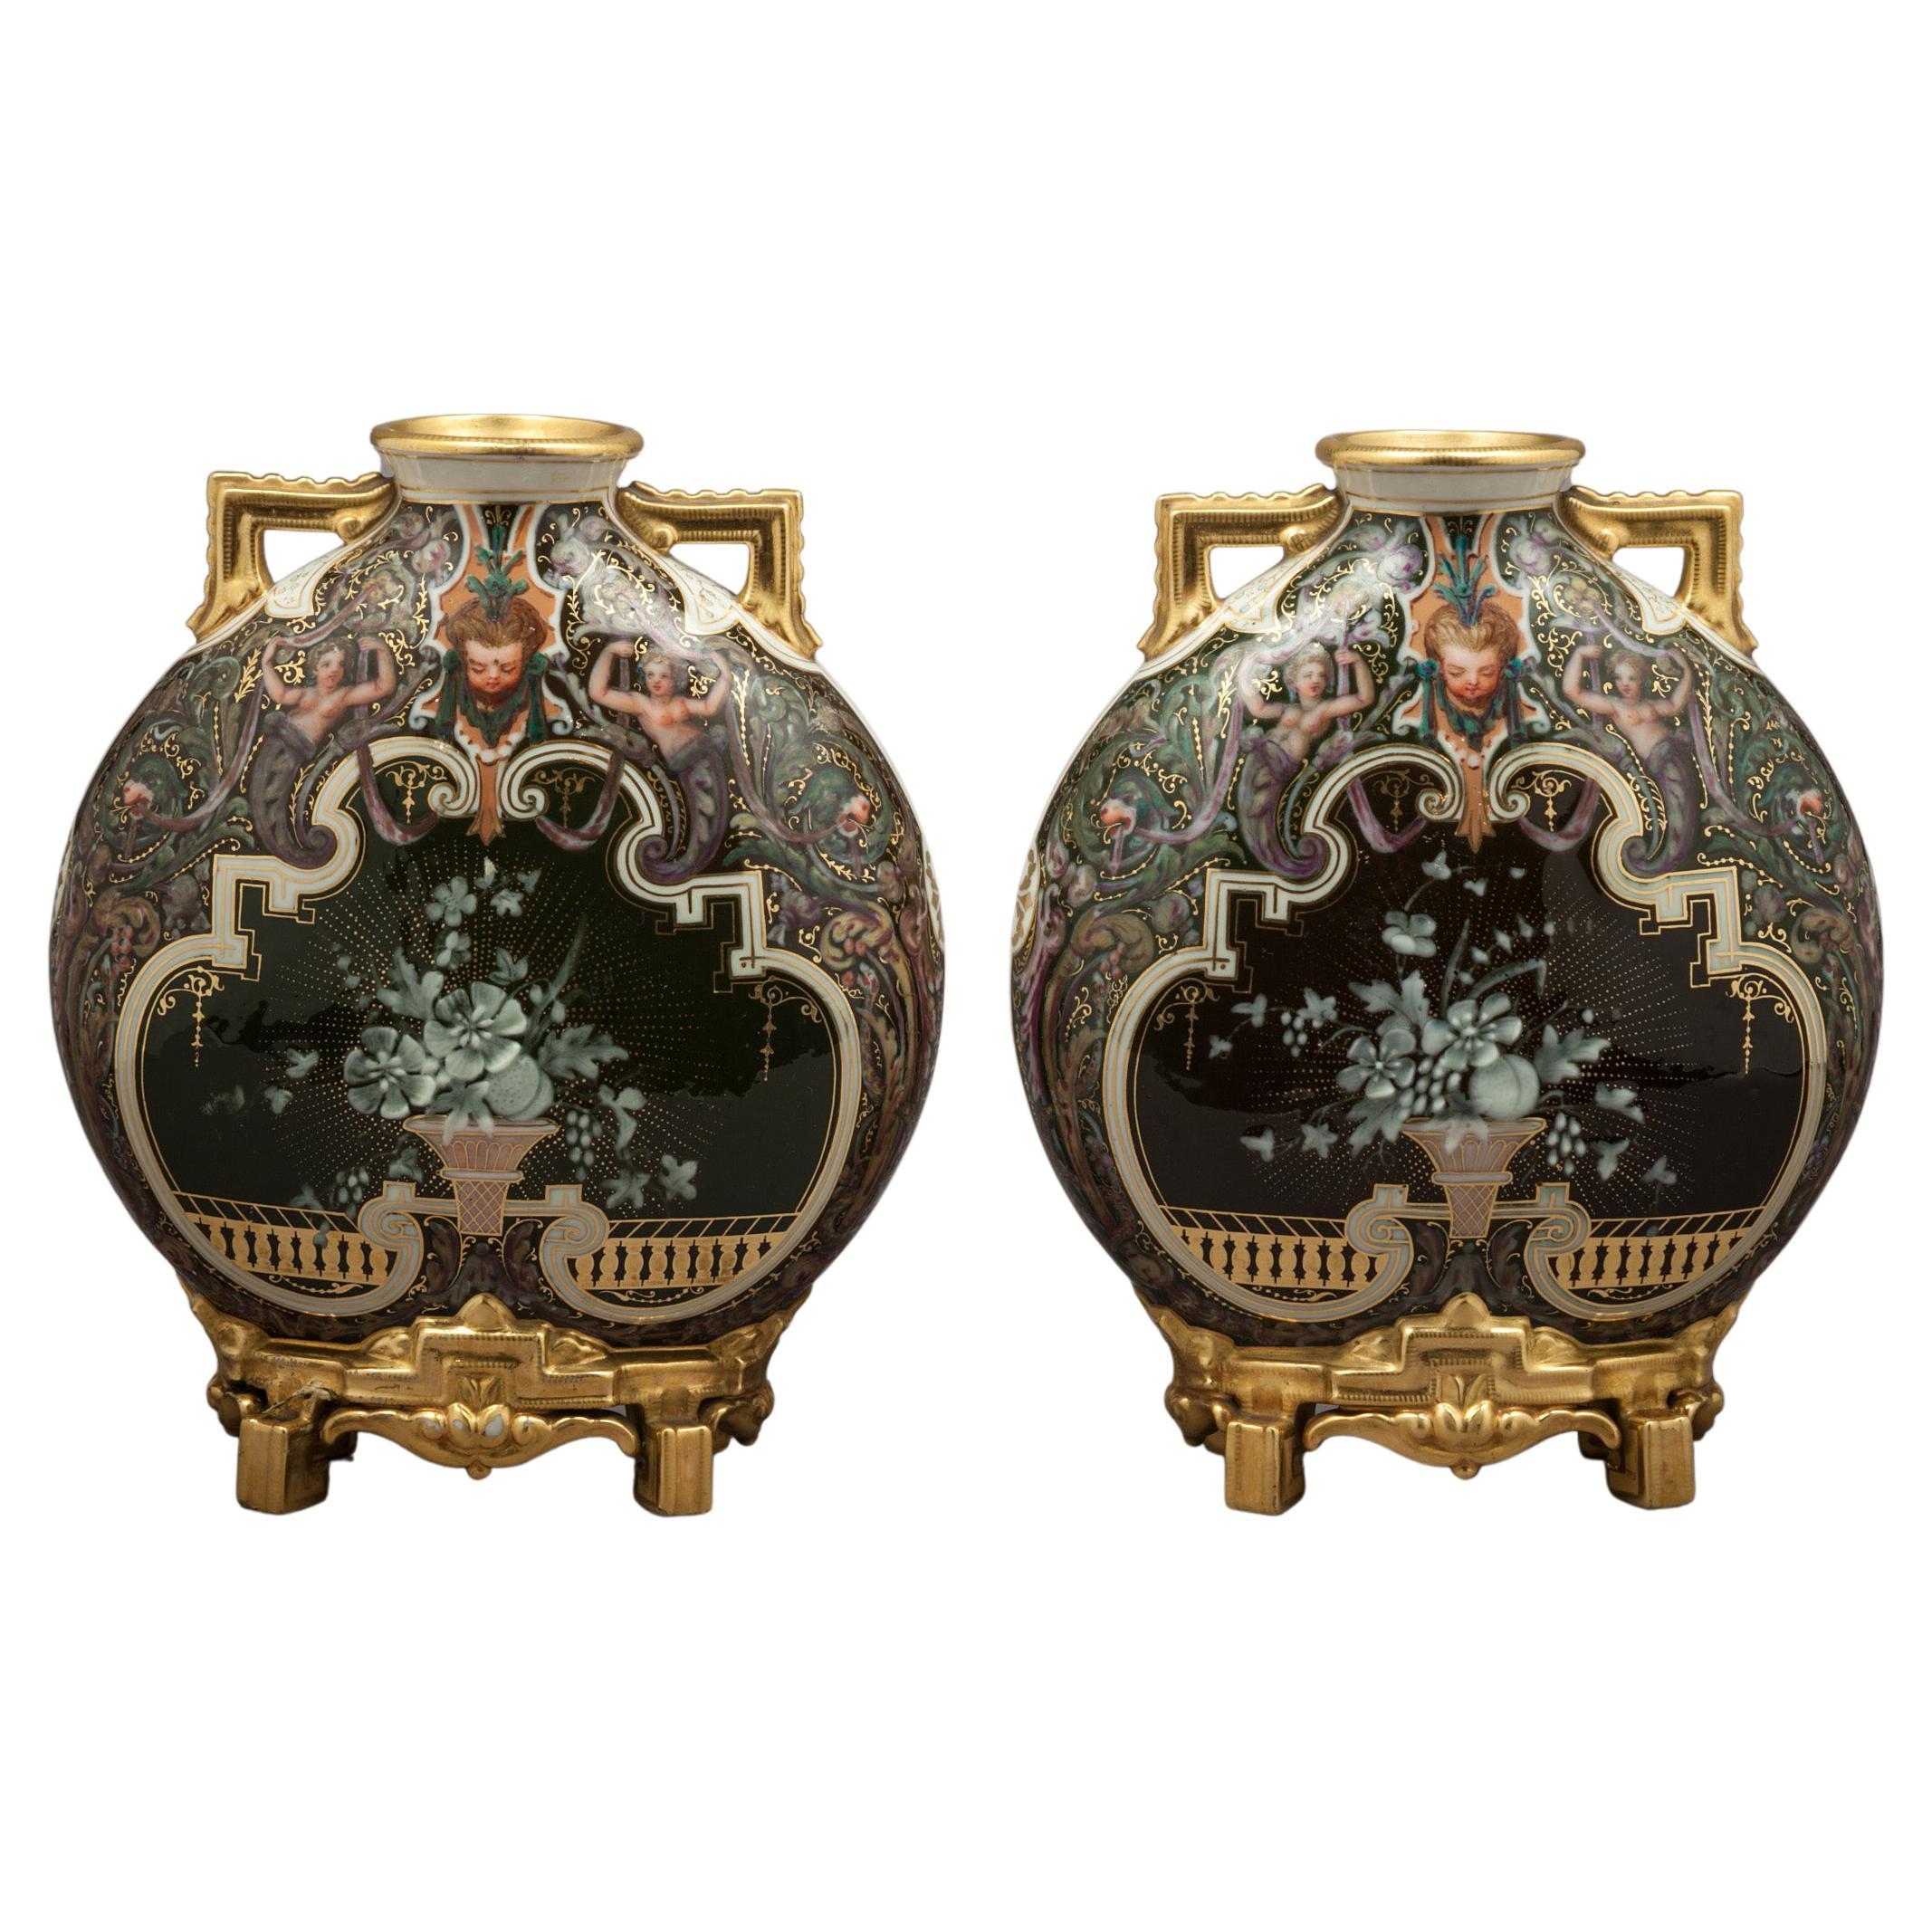 Pair of Rare Royal Worcester Pate-Sur-Pate Vases, circa 1890